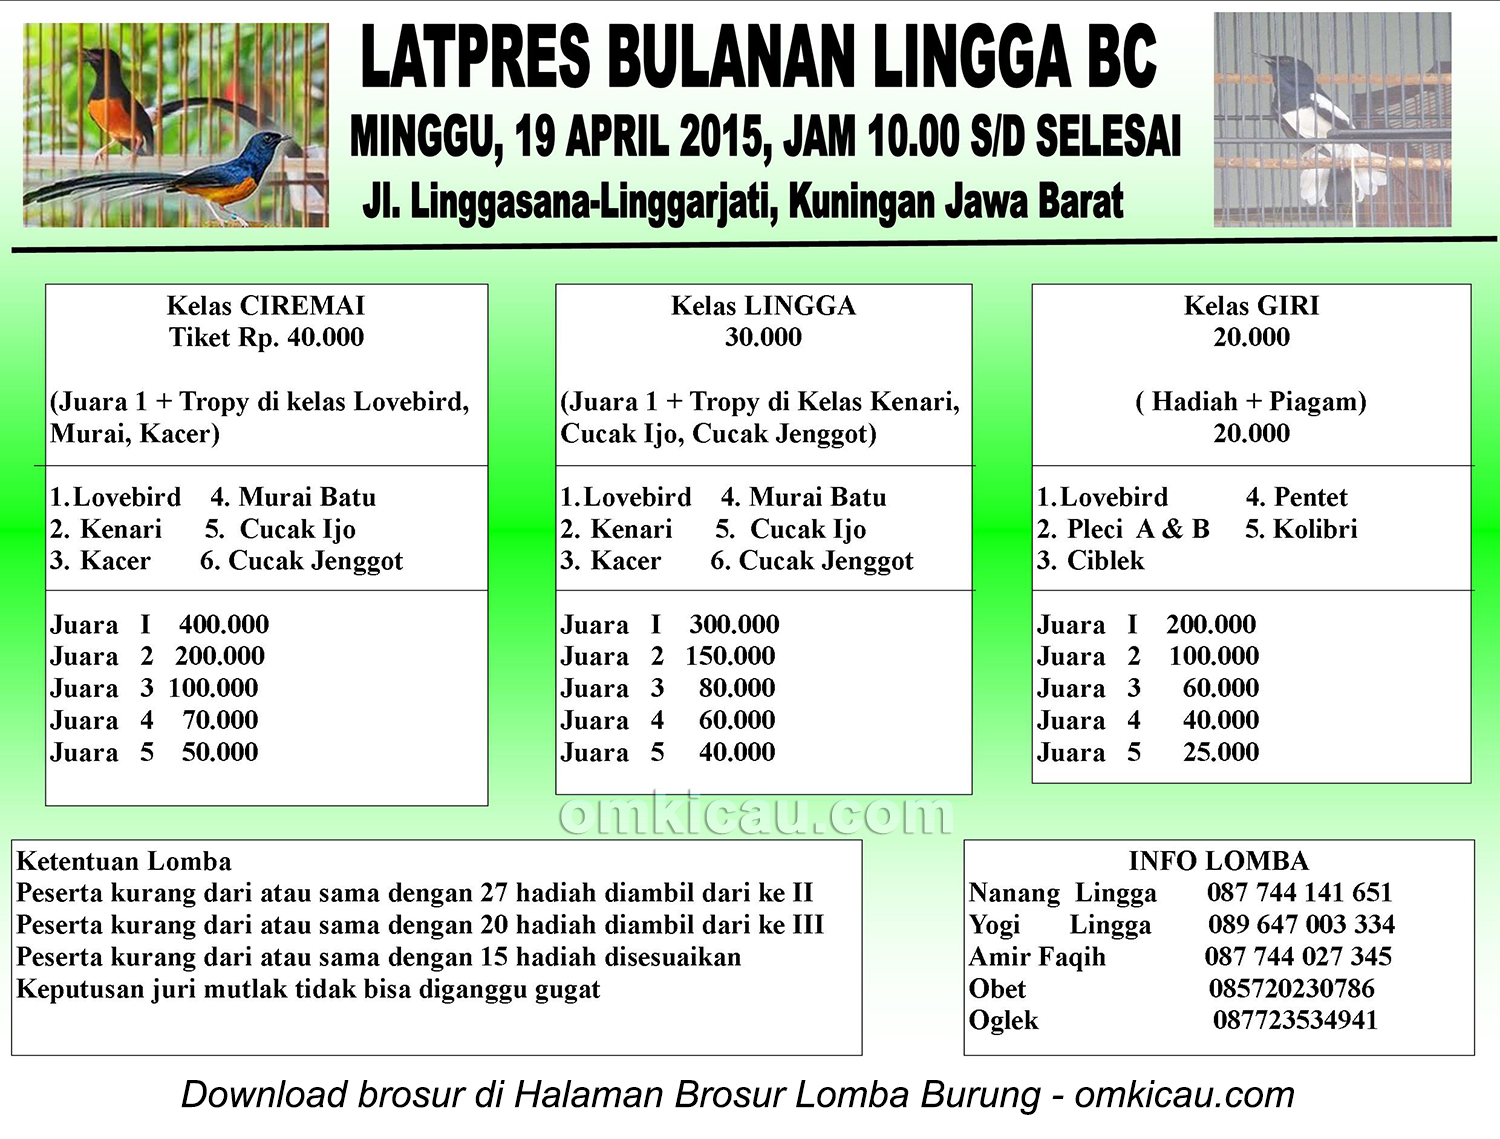 Brosur Latpres Bulanan Lingga BC, Kuningan, 19 April 2015